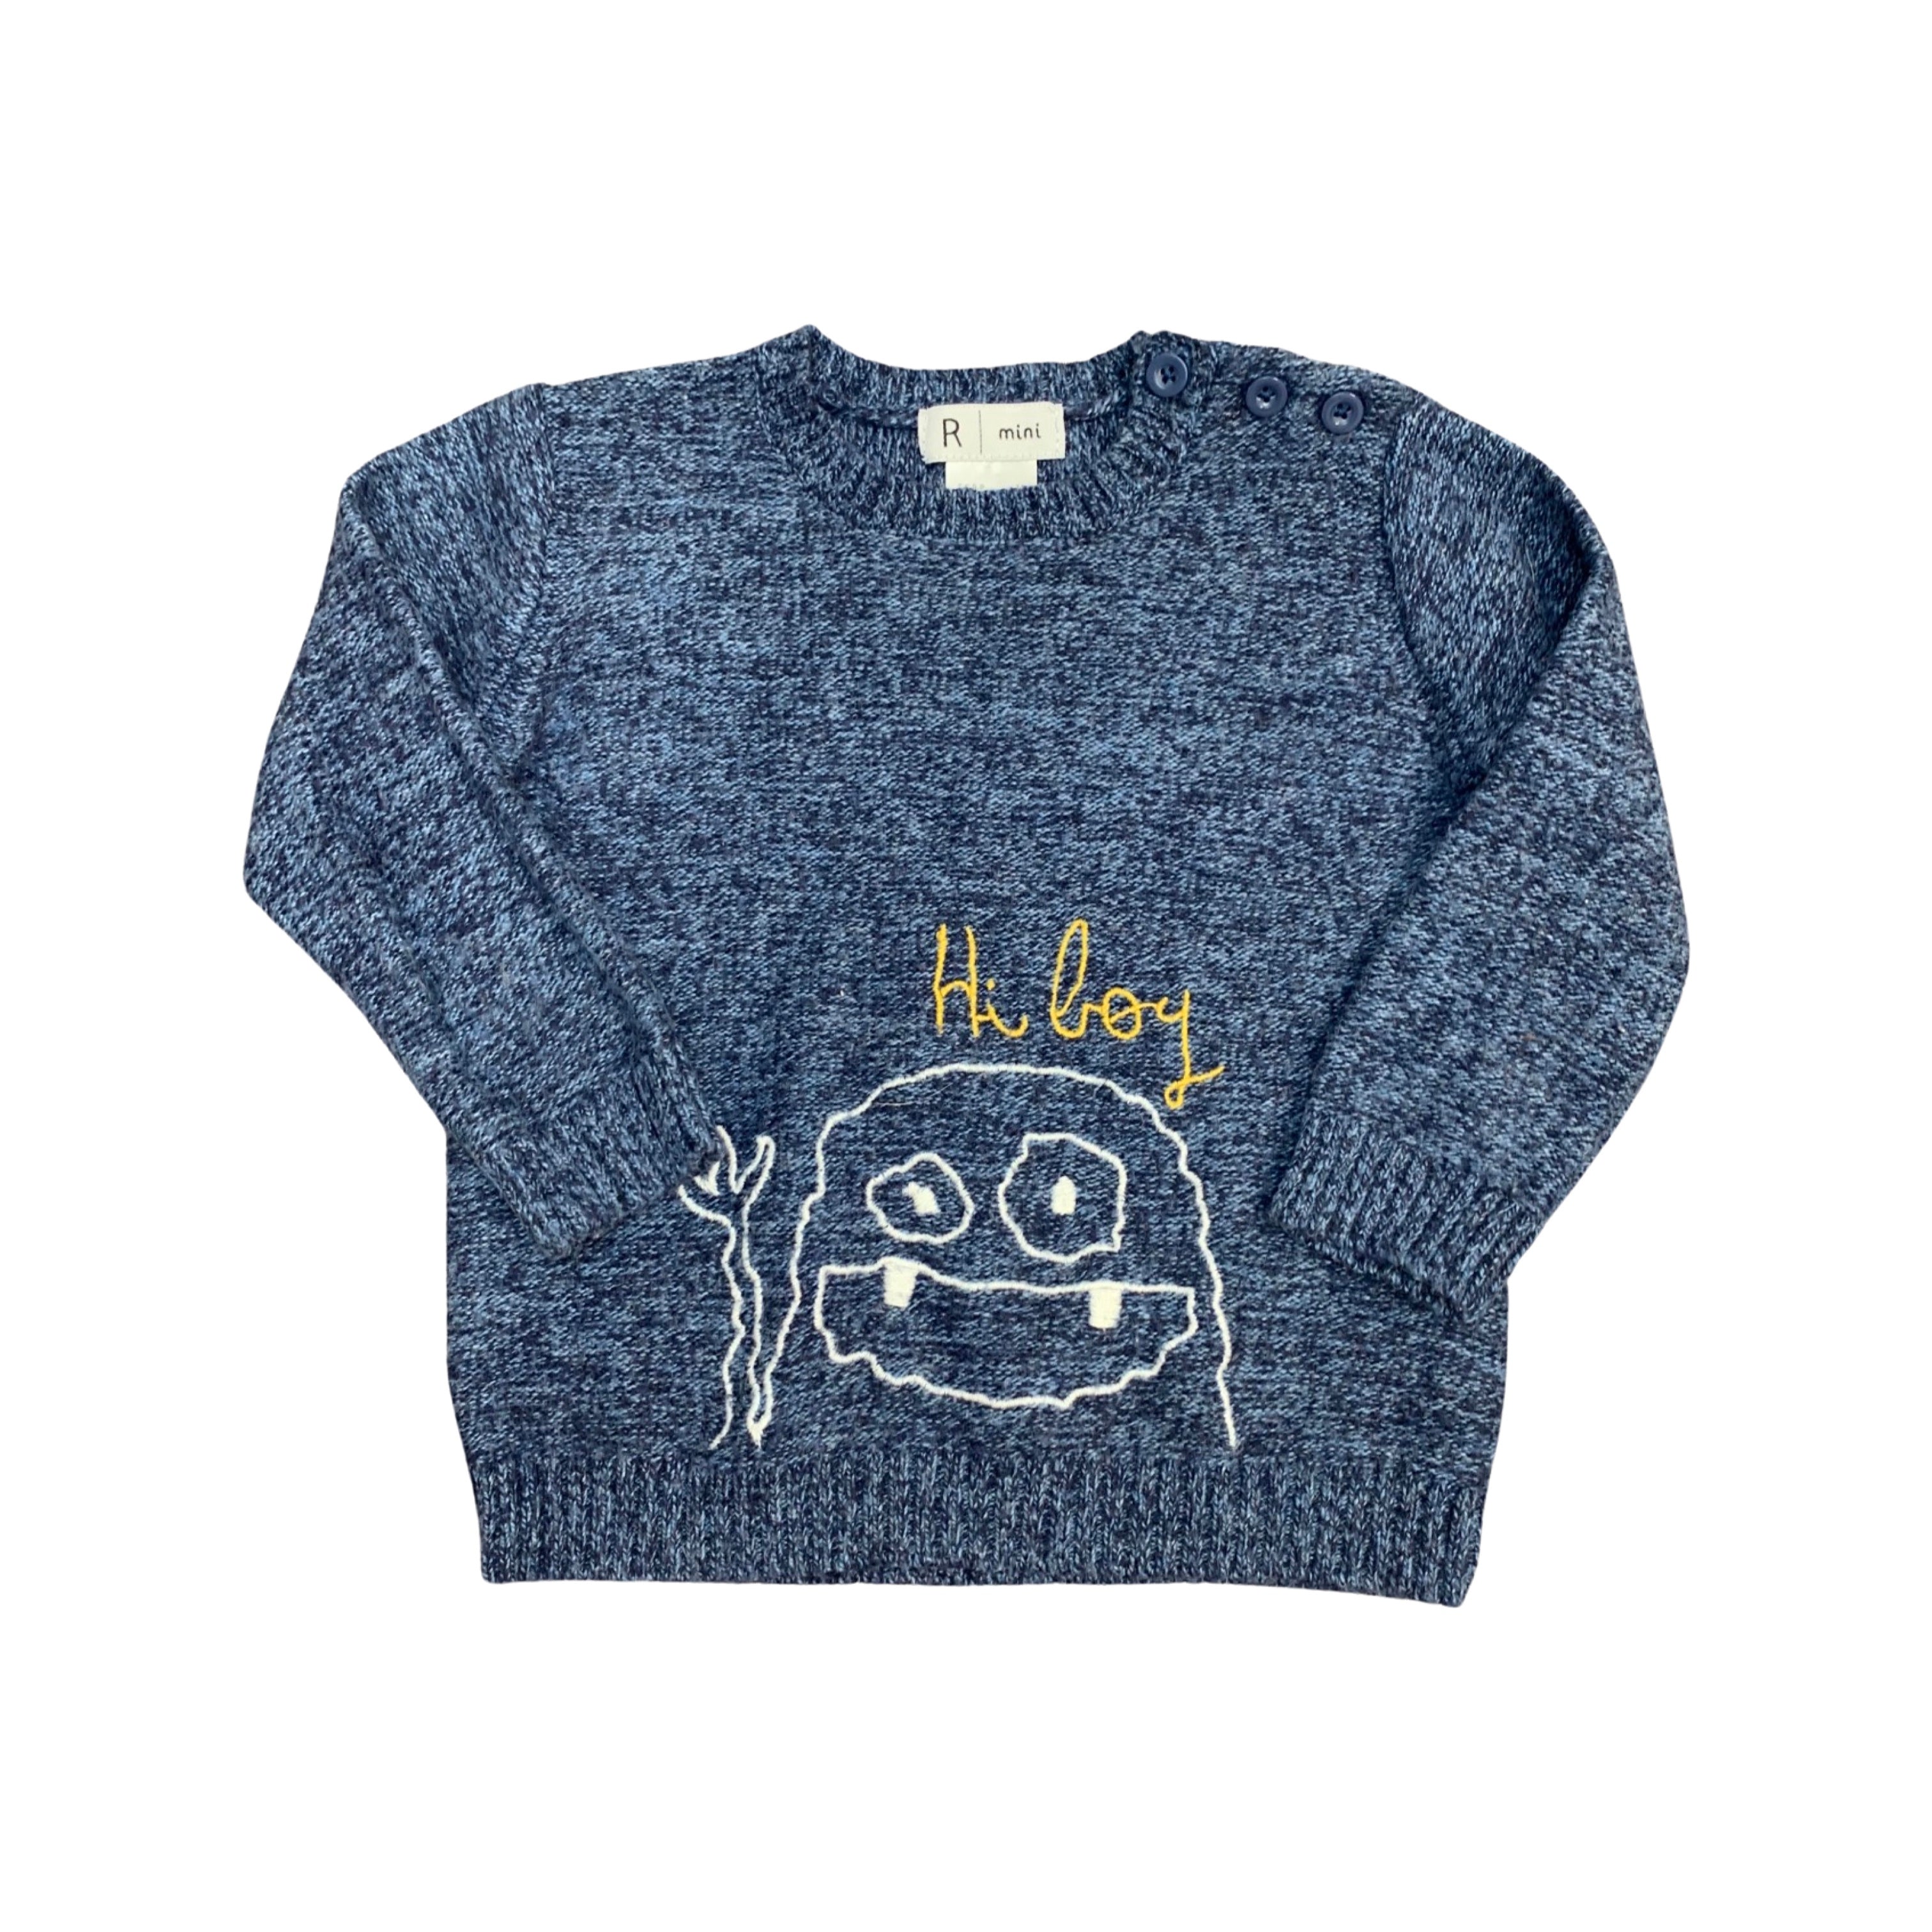 La Redoute 'Hi Boy' Embroidered Knit Jumper Baby Boy 9-12 Months/74cm